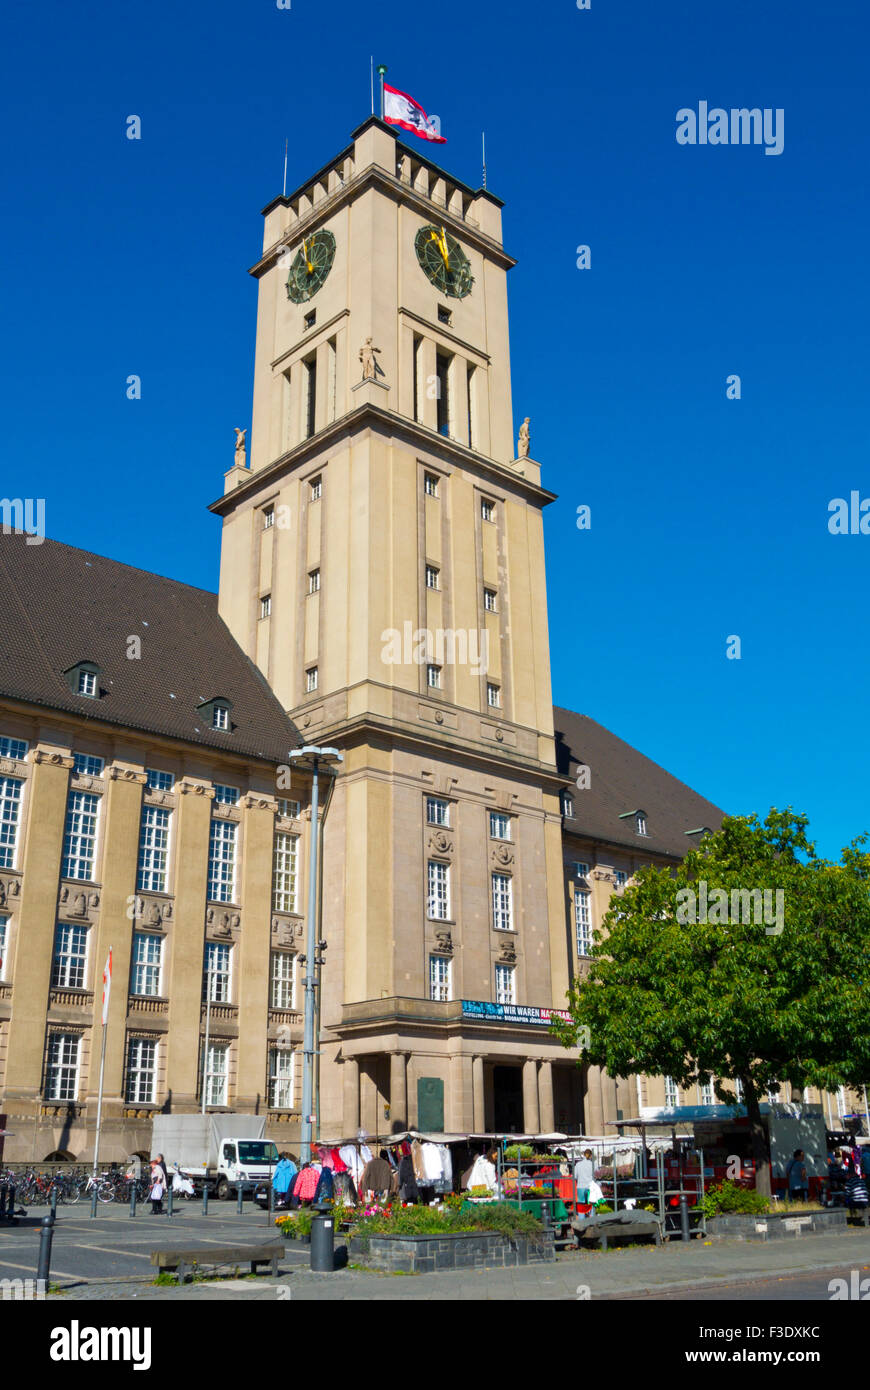 Il Rathaus Schöneberg, municipio, John F Kennedy Platz, Schöneberg di Berlino, Germania Foto Stock